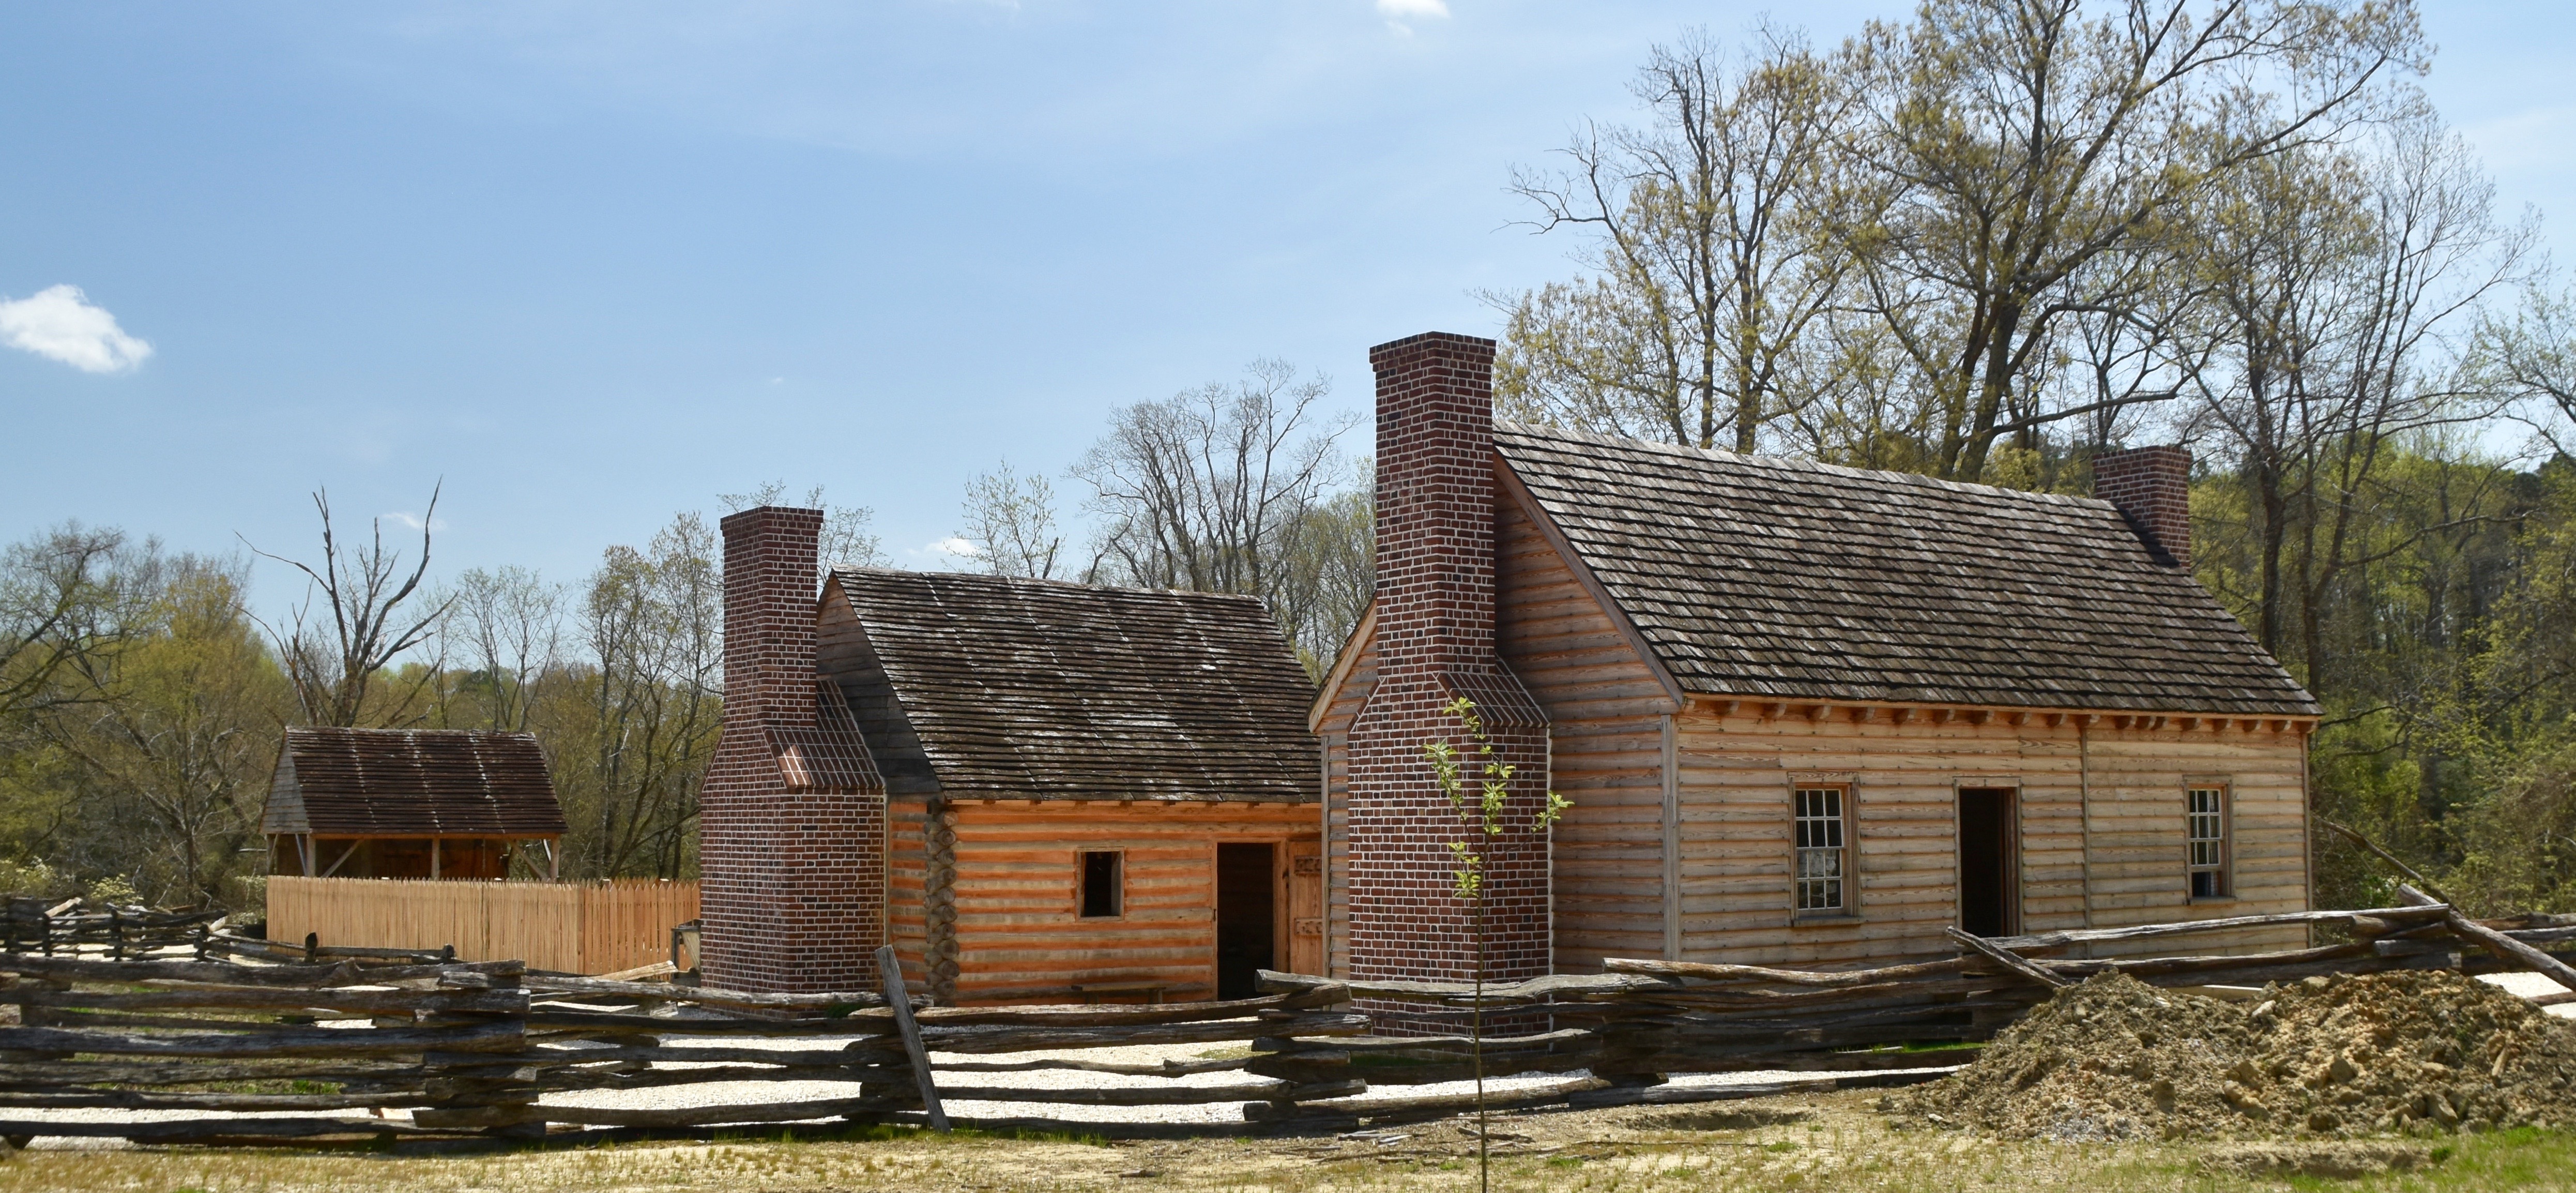  Colonial Farm, American Revolution Museum